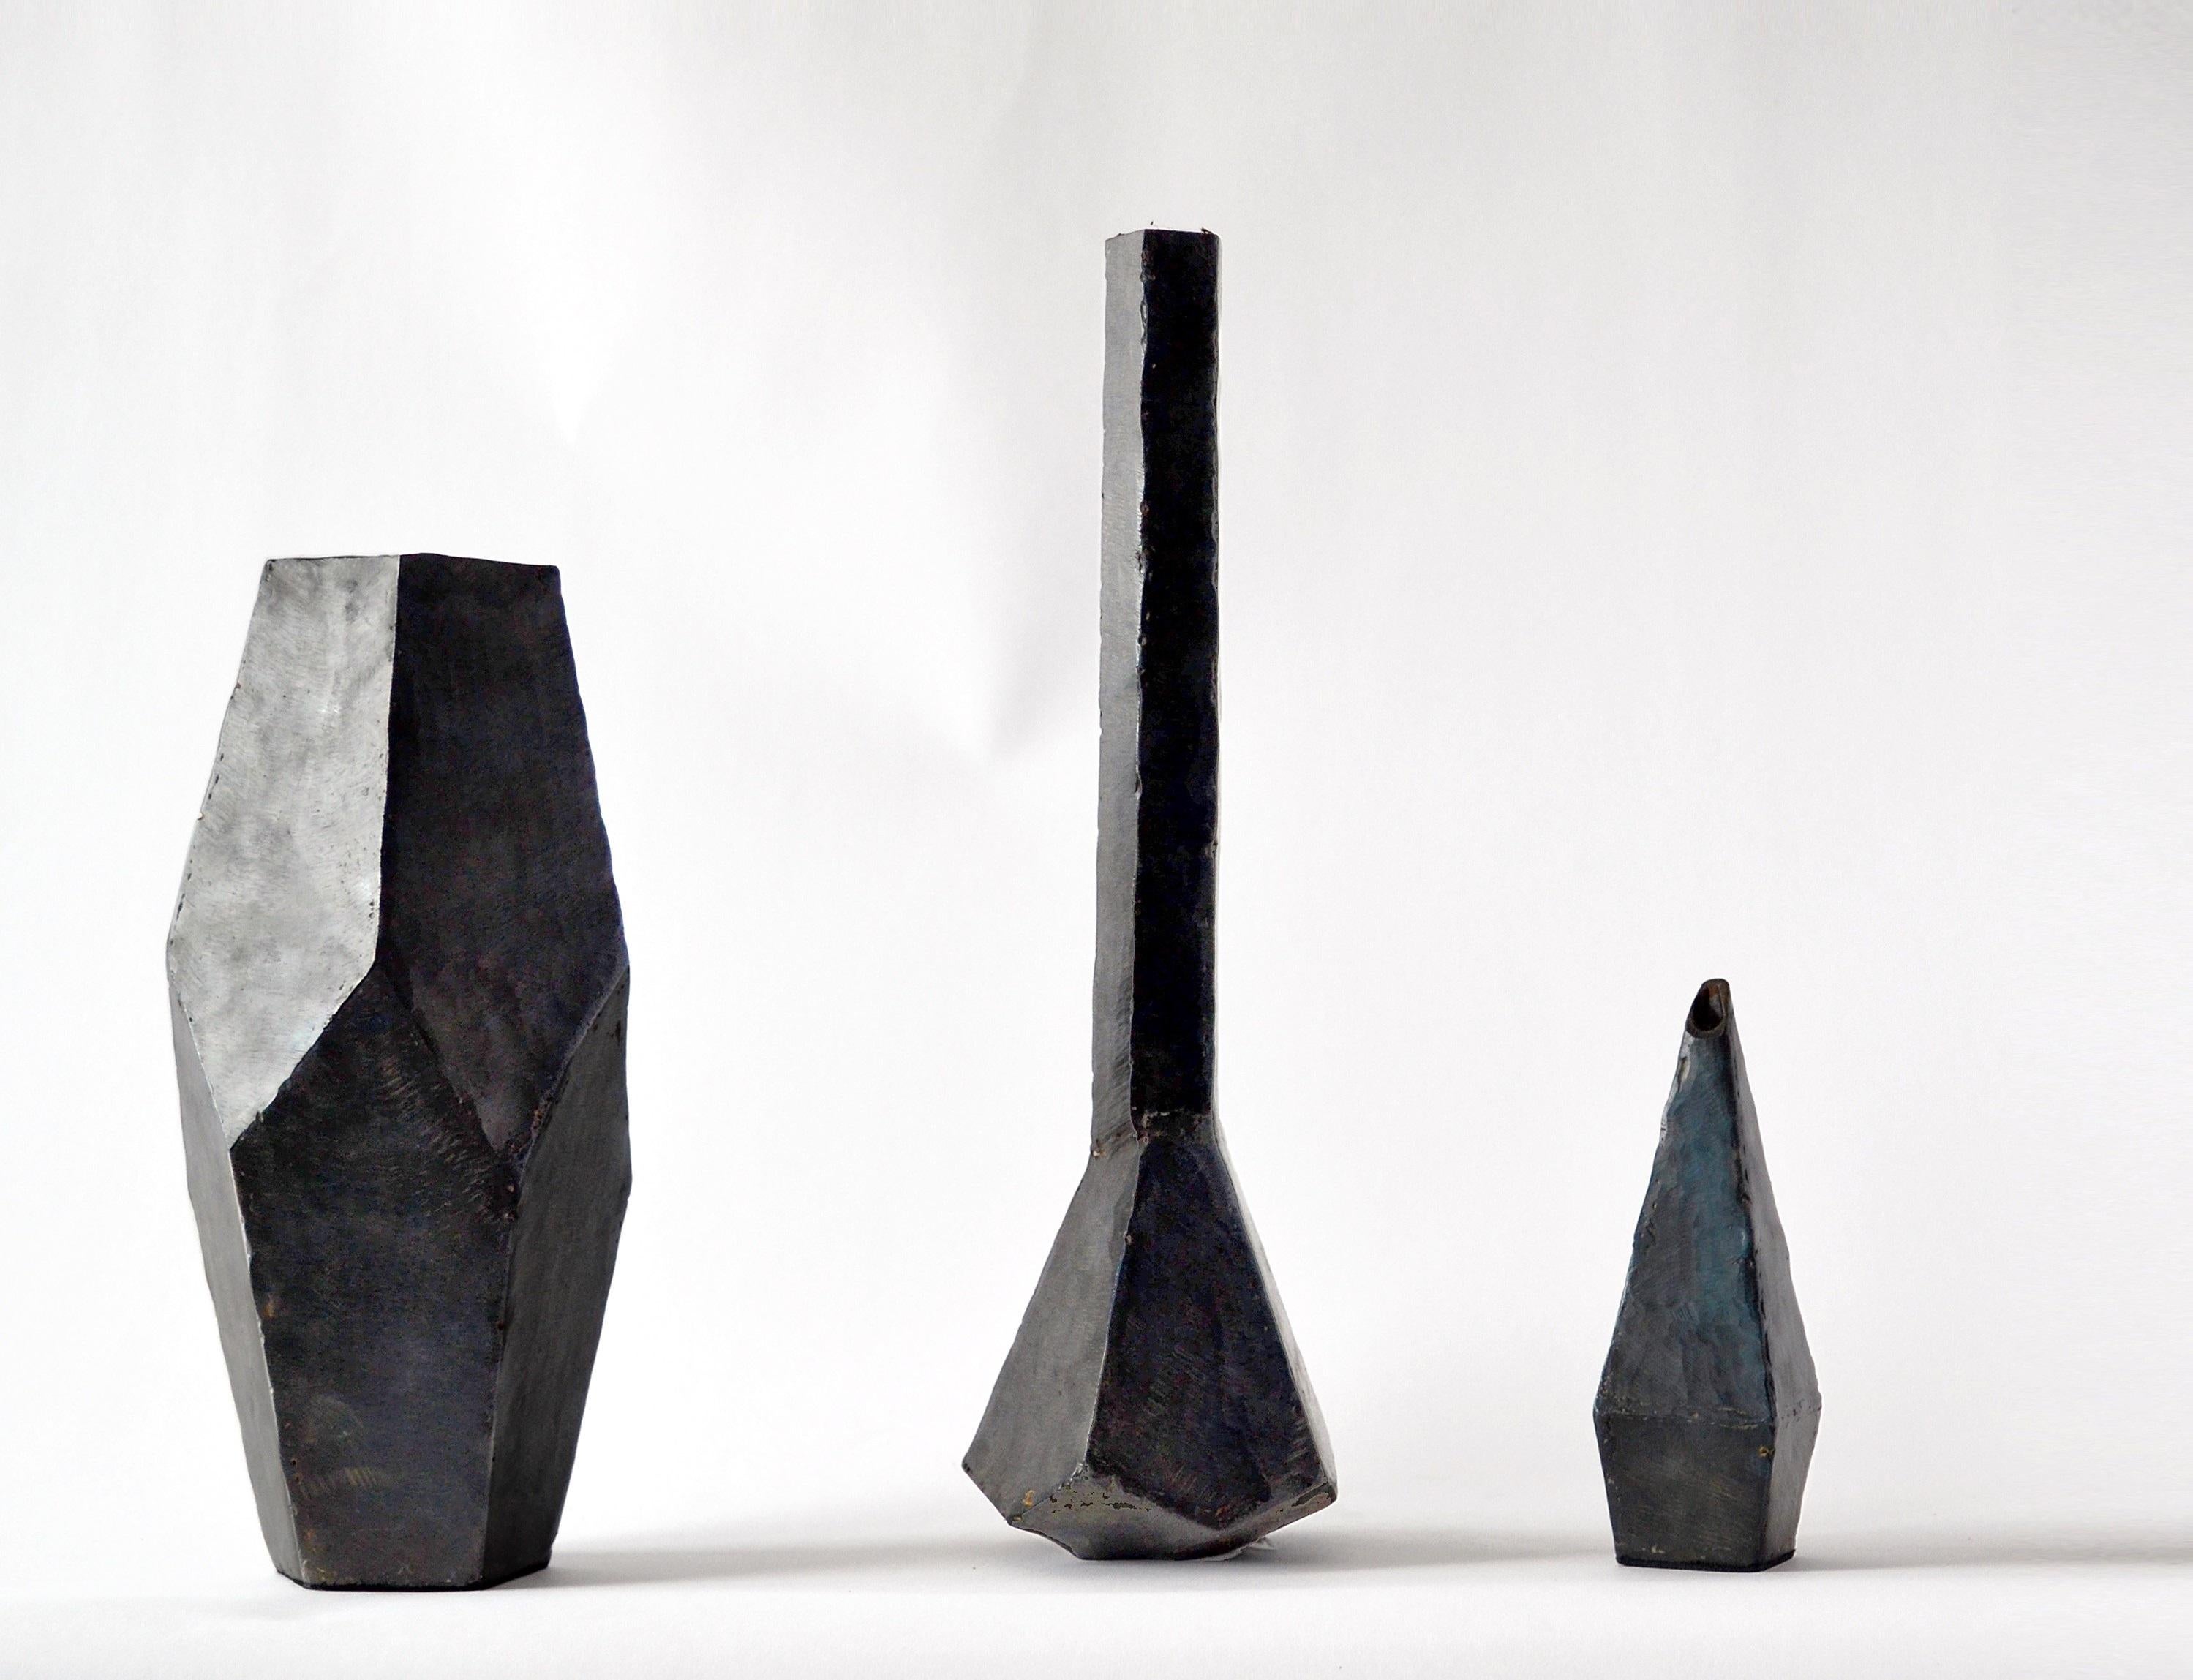 American Geometric Vessel Sculpture Handmade by J.M. Szymanski, Blackened and Waxed Iron